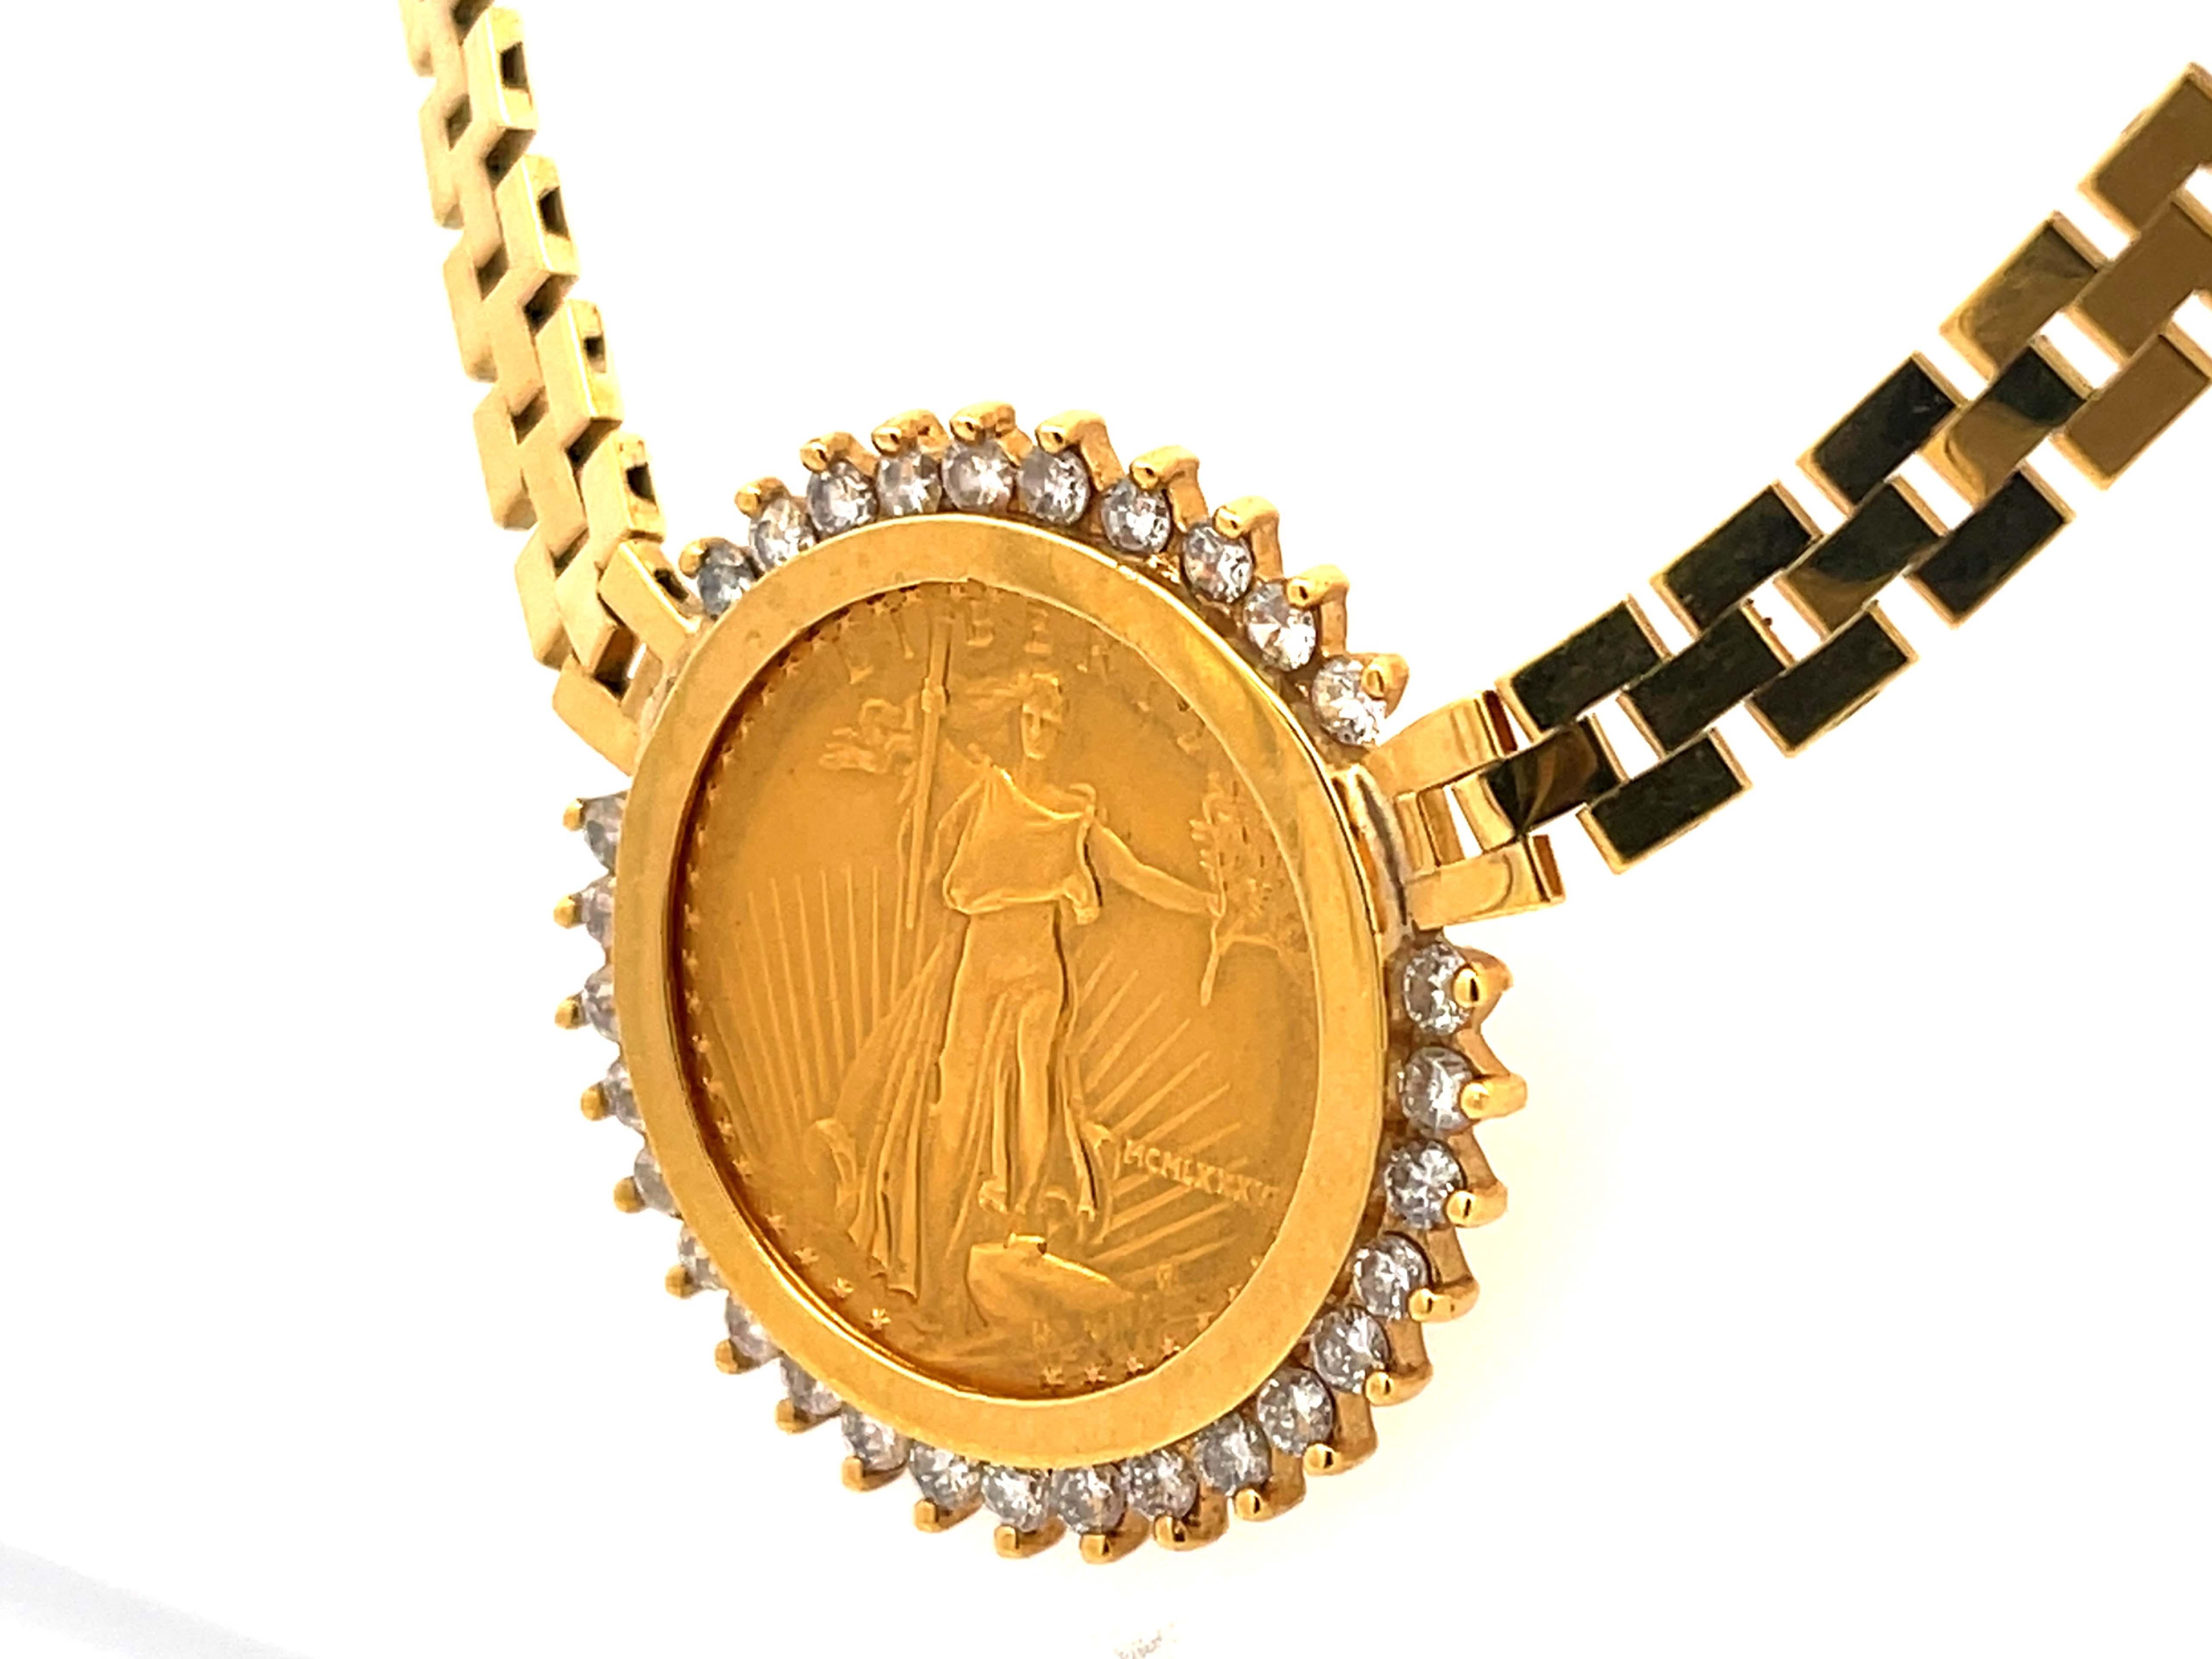 18k gold eagle pendant